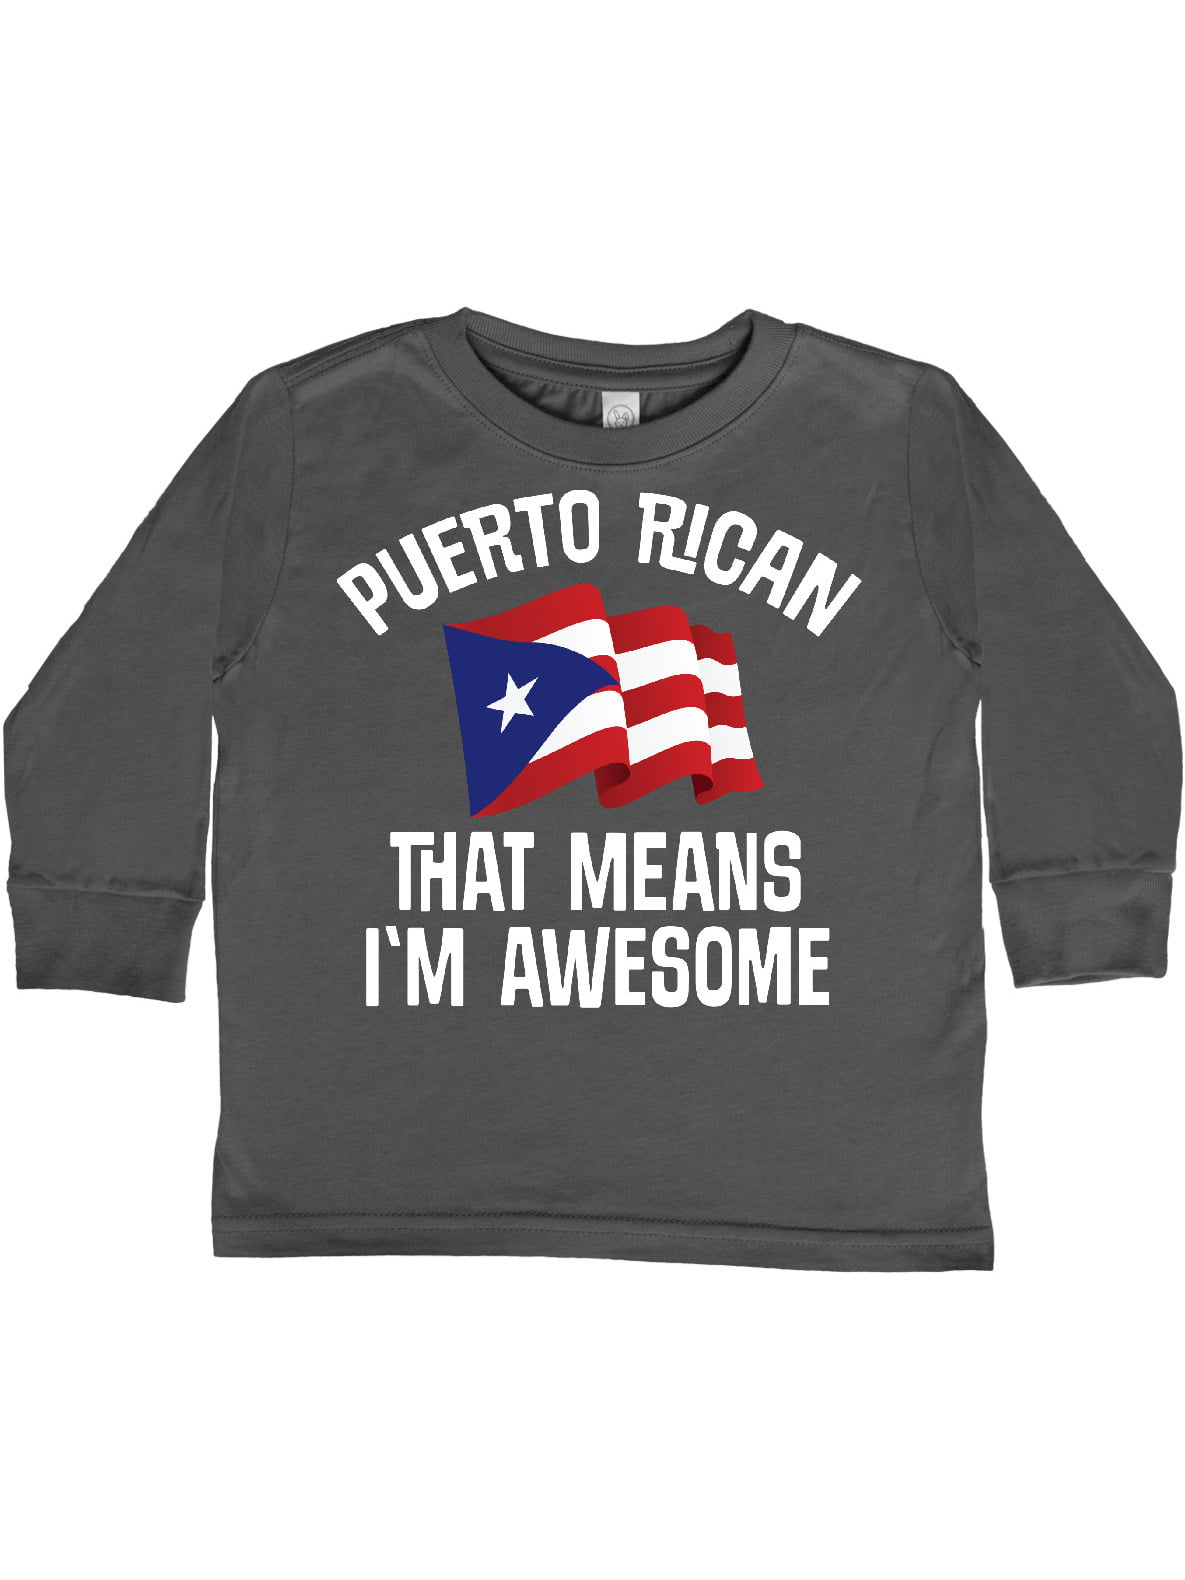 CERTONGCXTS Toddler Puerto Rican Swag ComfortSoft Long Sleeve Shirt